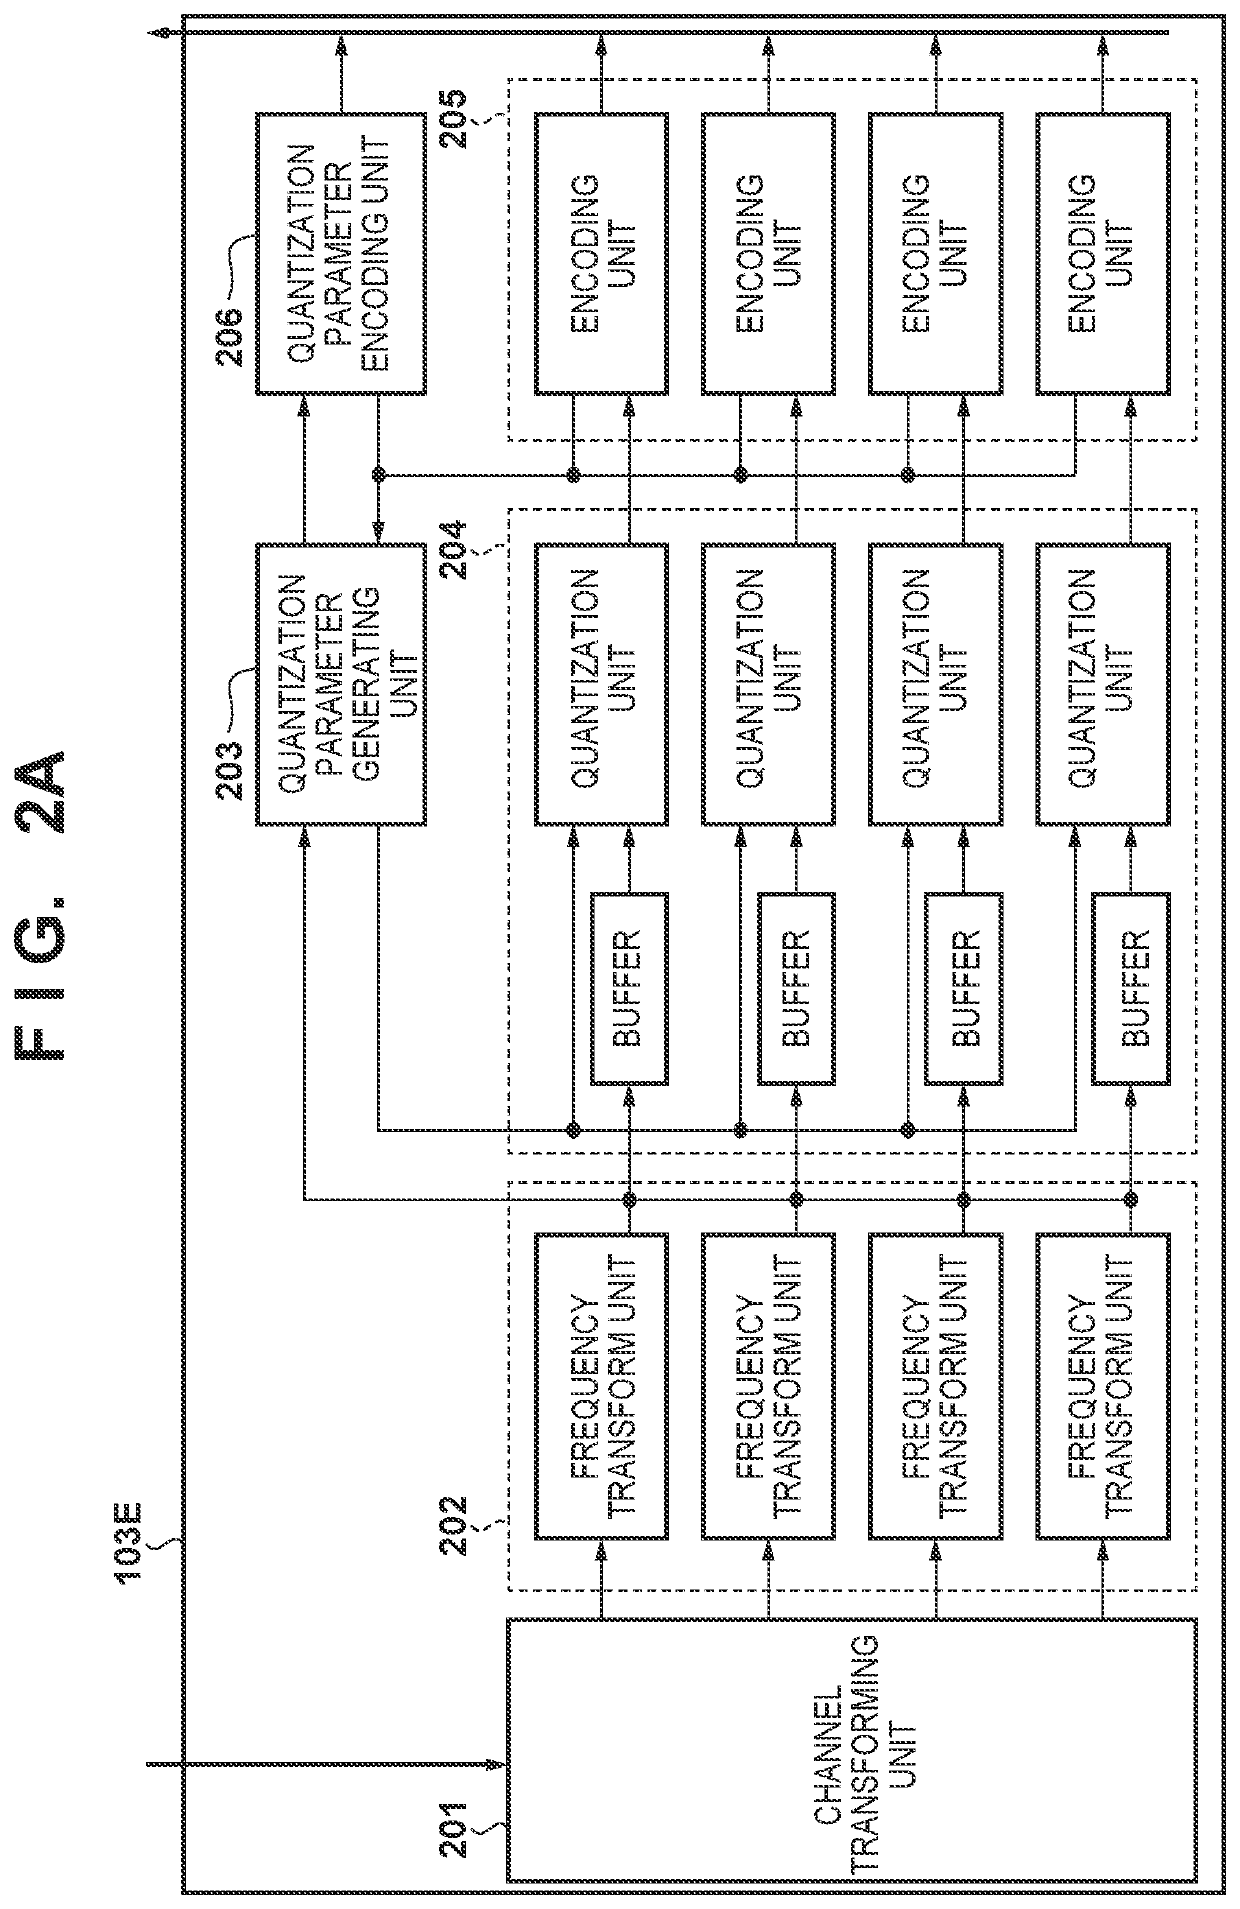 Image encoding apparatus, image decoding apparatus, control methods thereof, and non-transitory computer-readable storage medium